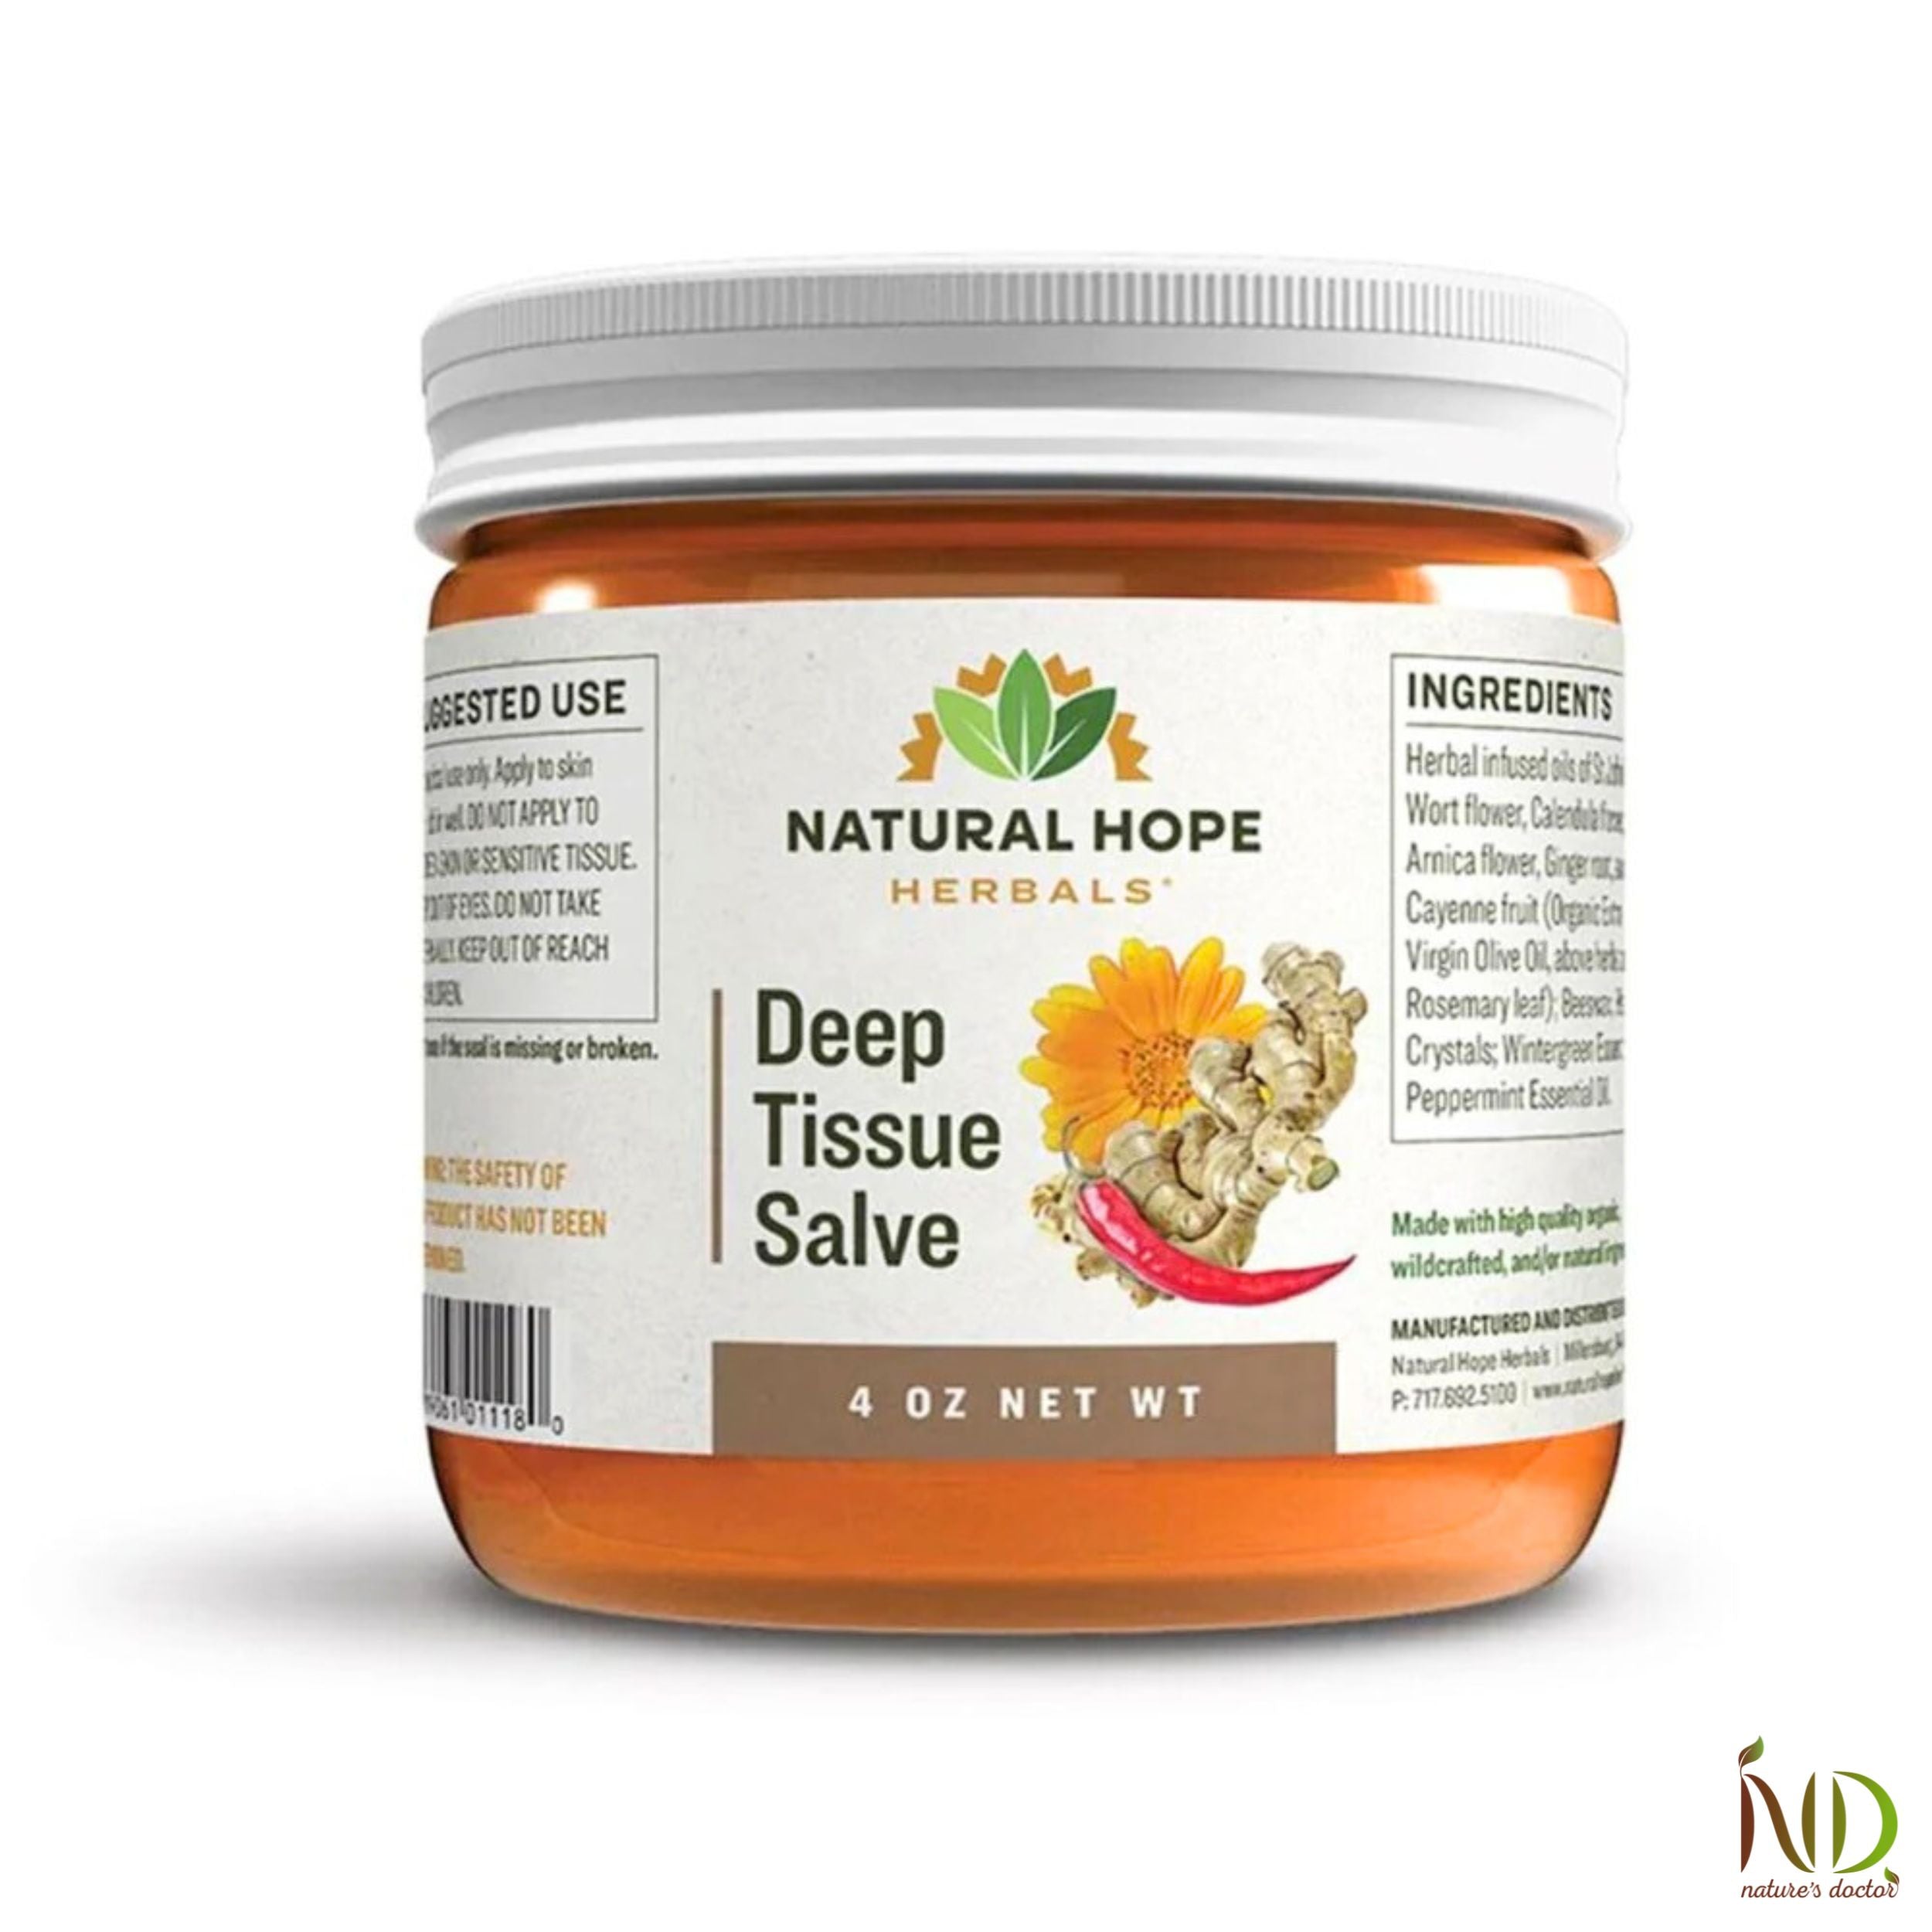 Deep Tissue Salve - Natural Hope Herbals